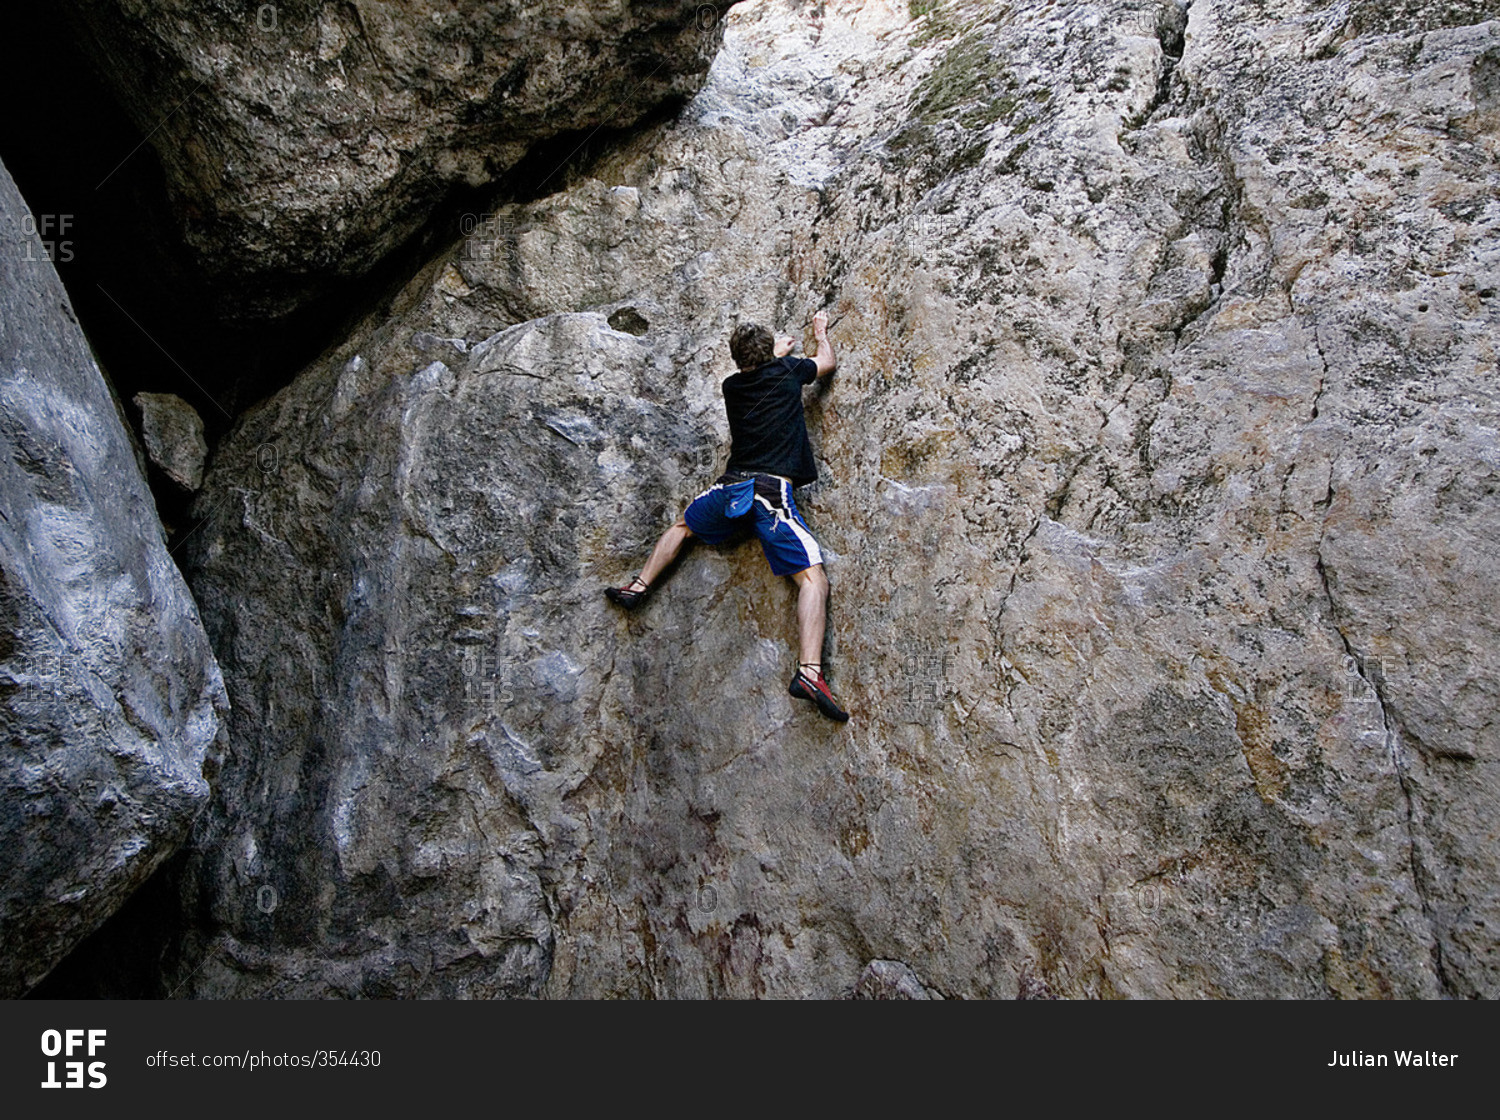 Man climbing a sheer rock face